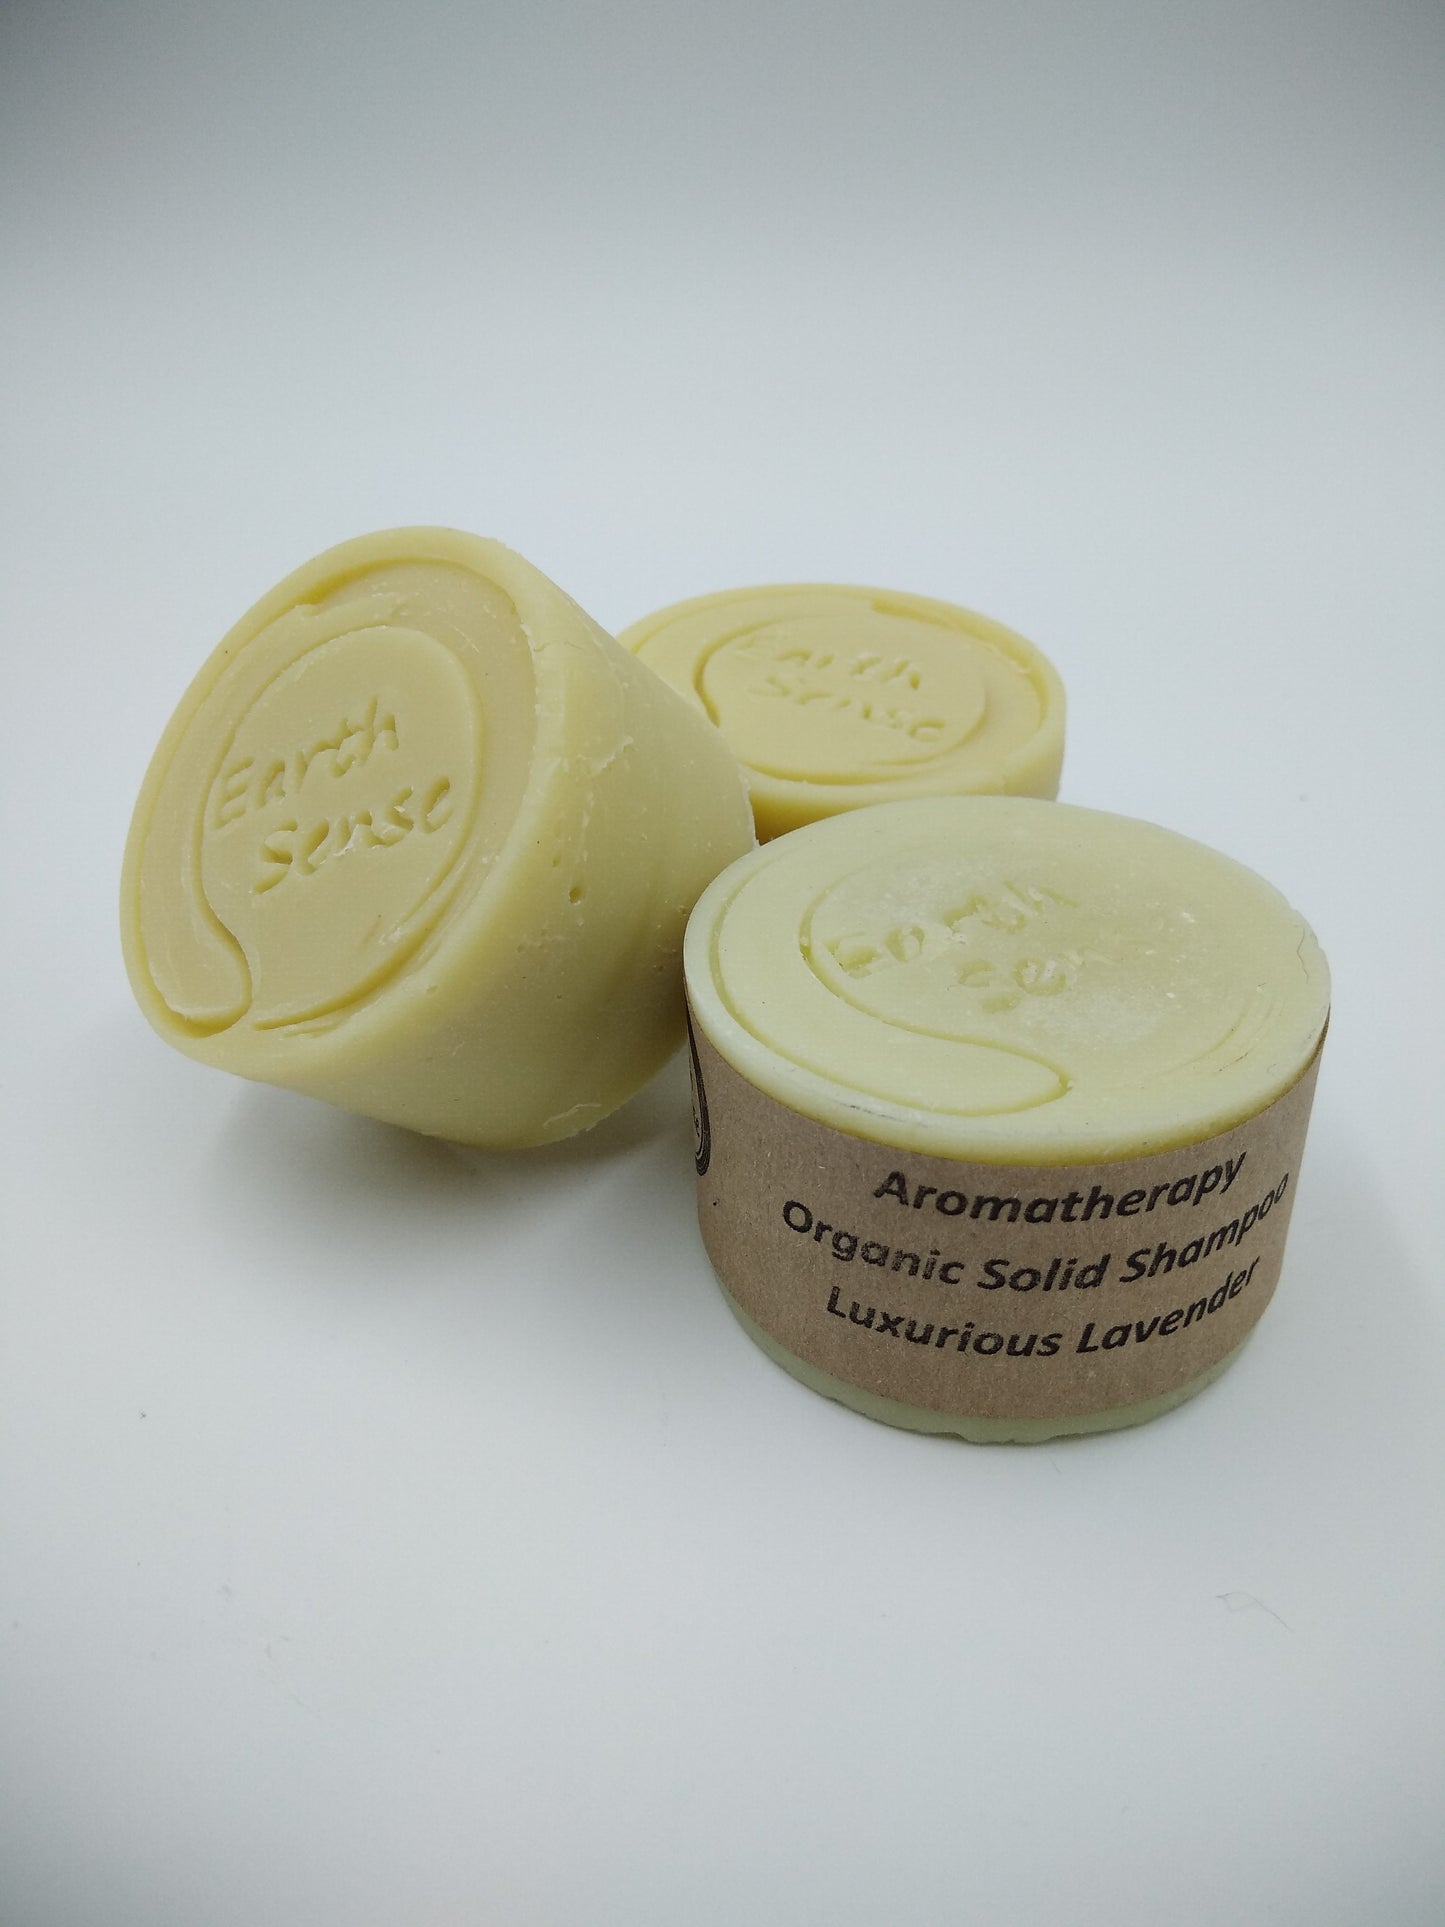 Organic Certified Balancing Solid Shampoo - Lavender & Mint - Dry & all Hair Types 60g - Earthsenseorganics